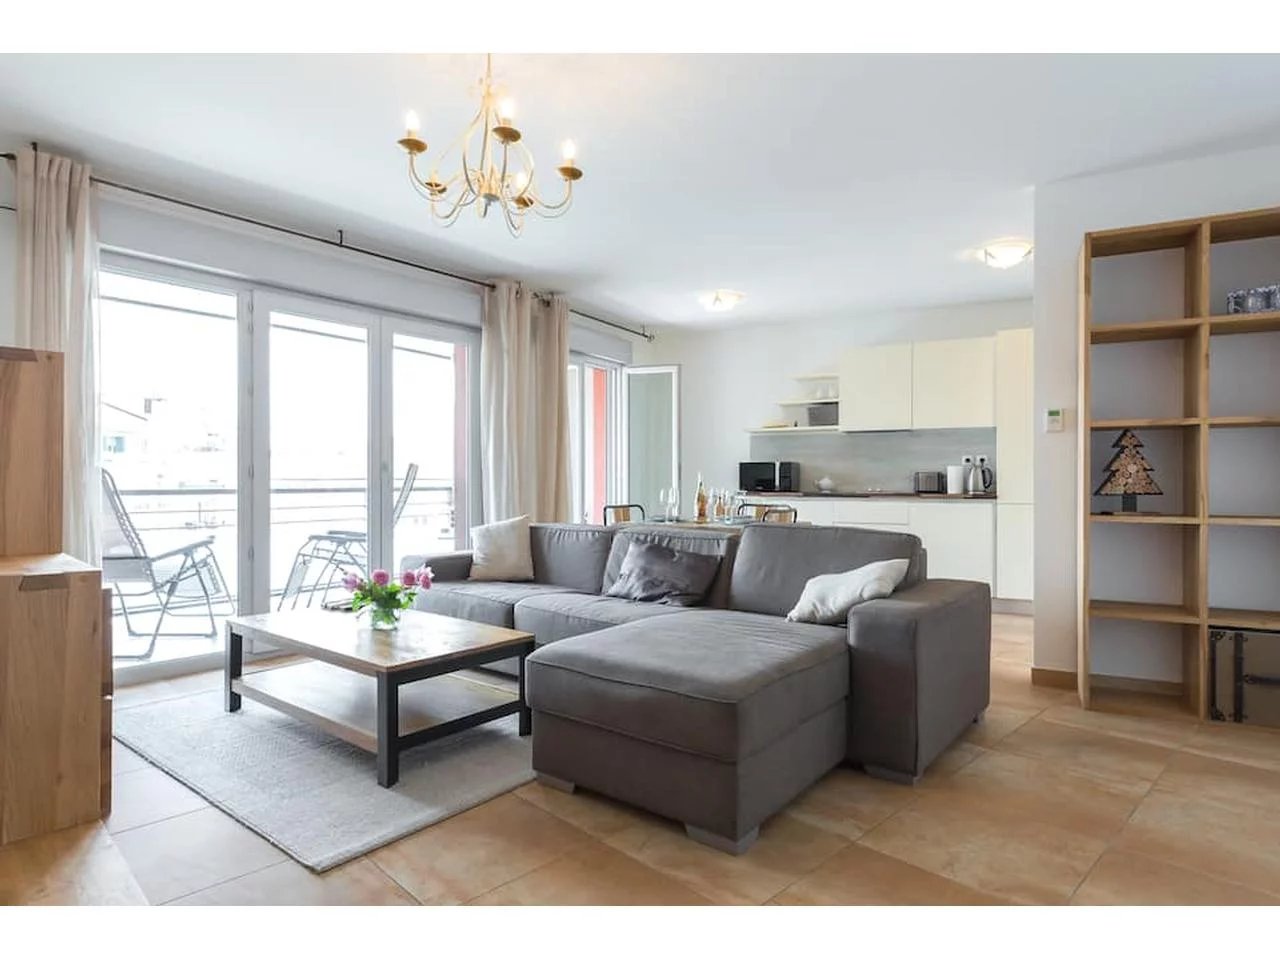 Appartement  3 Locali 64.23m2  In vendita   675 000 €